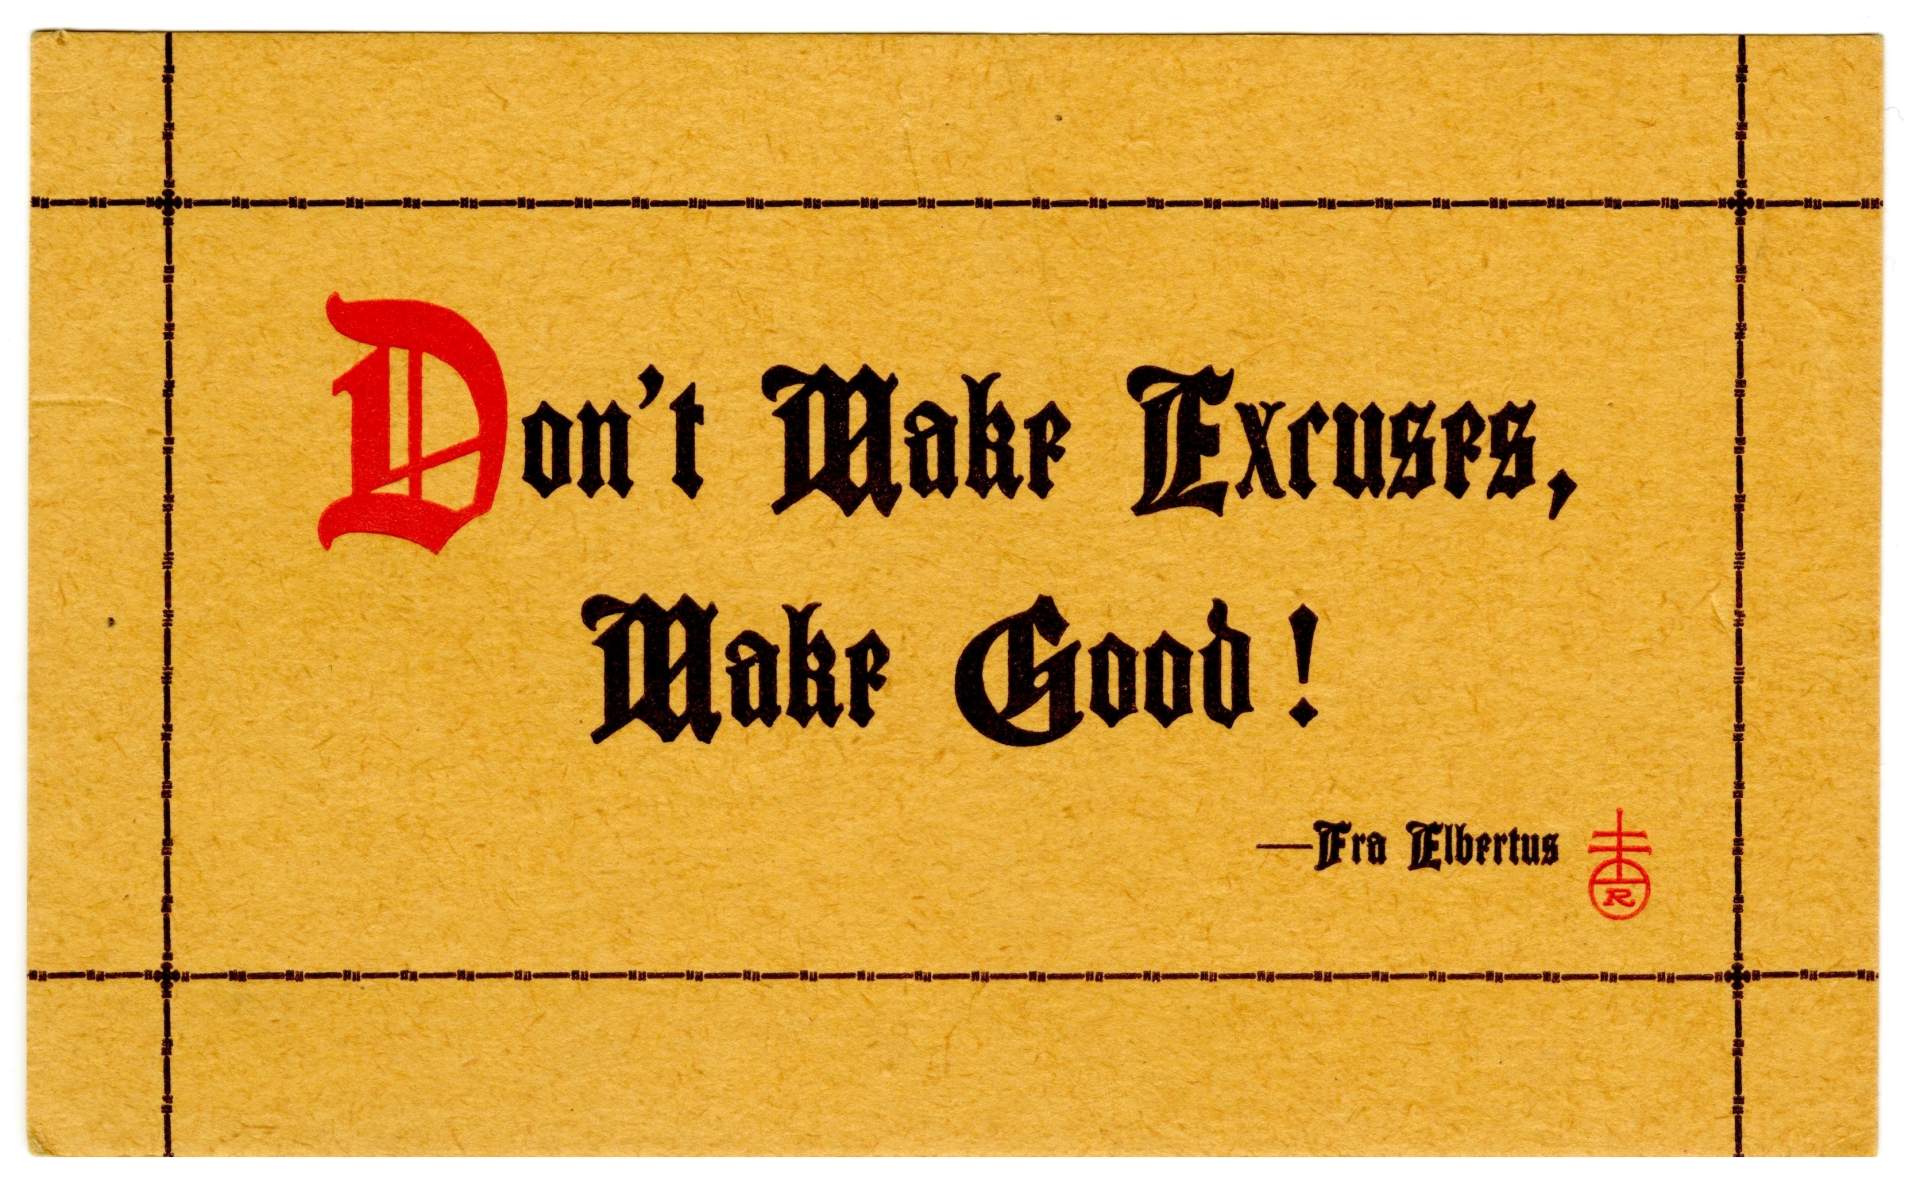 Don’t Make Excuses, Make Good!